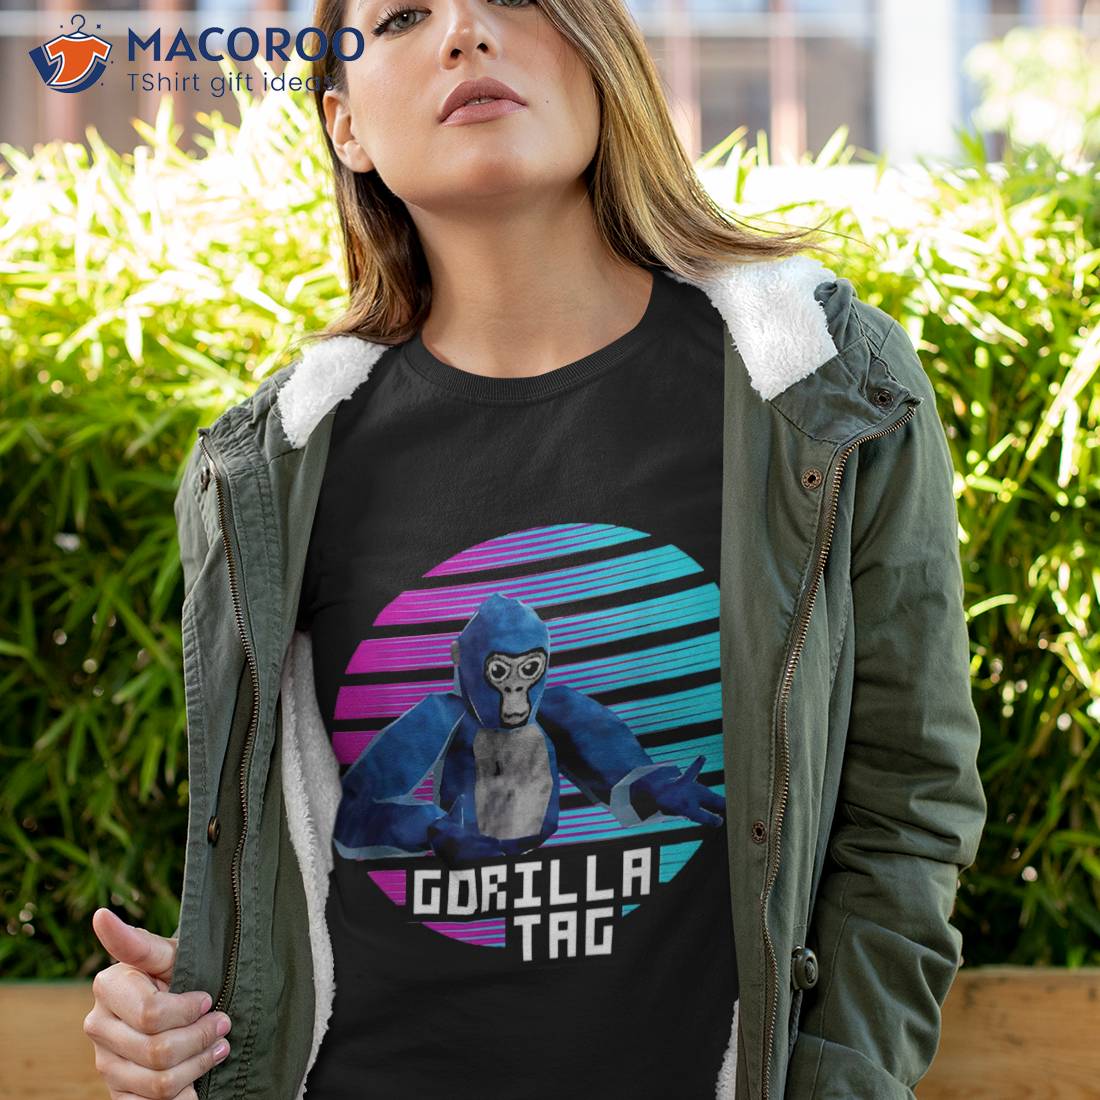 https://images.macoroo.com/wp-content/uploads/2023/05/retro-gorilla-tag-shirt-merch-monke-boys-gifts-shirt-tshirt-4.jpg